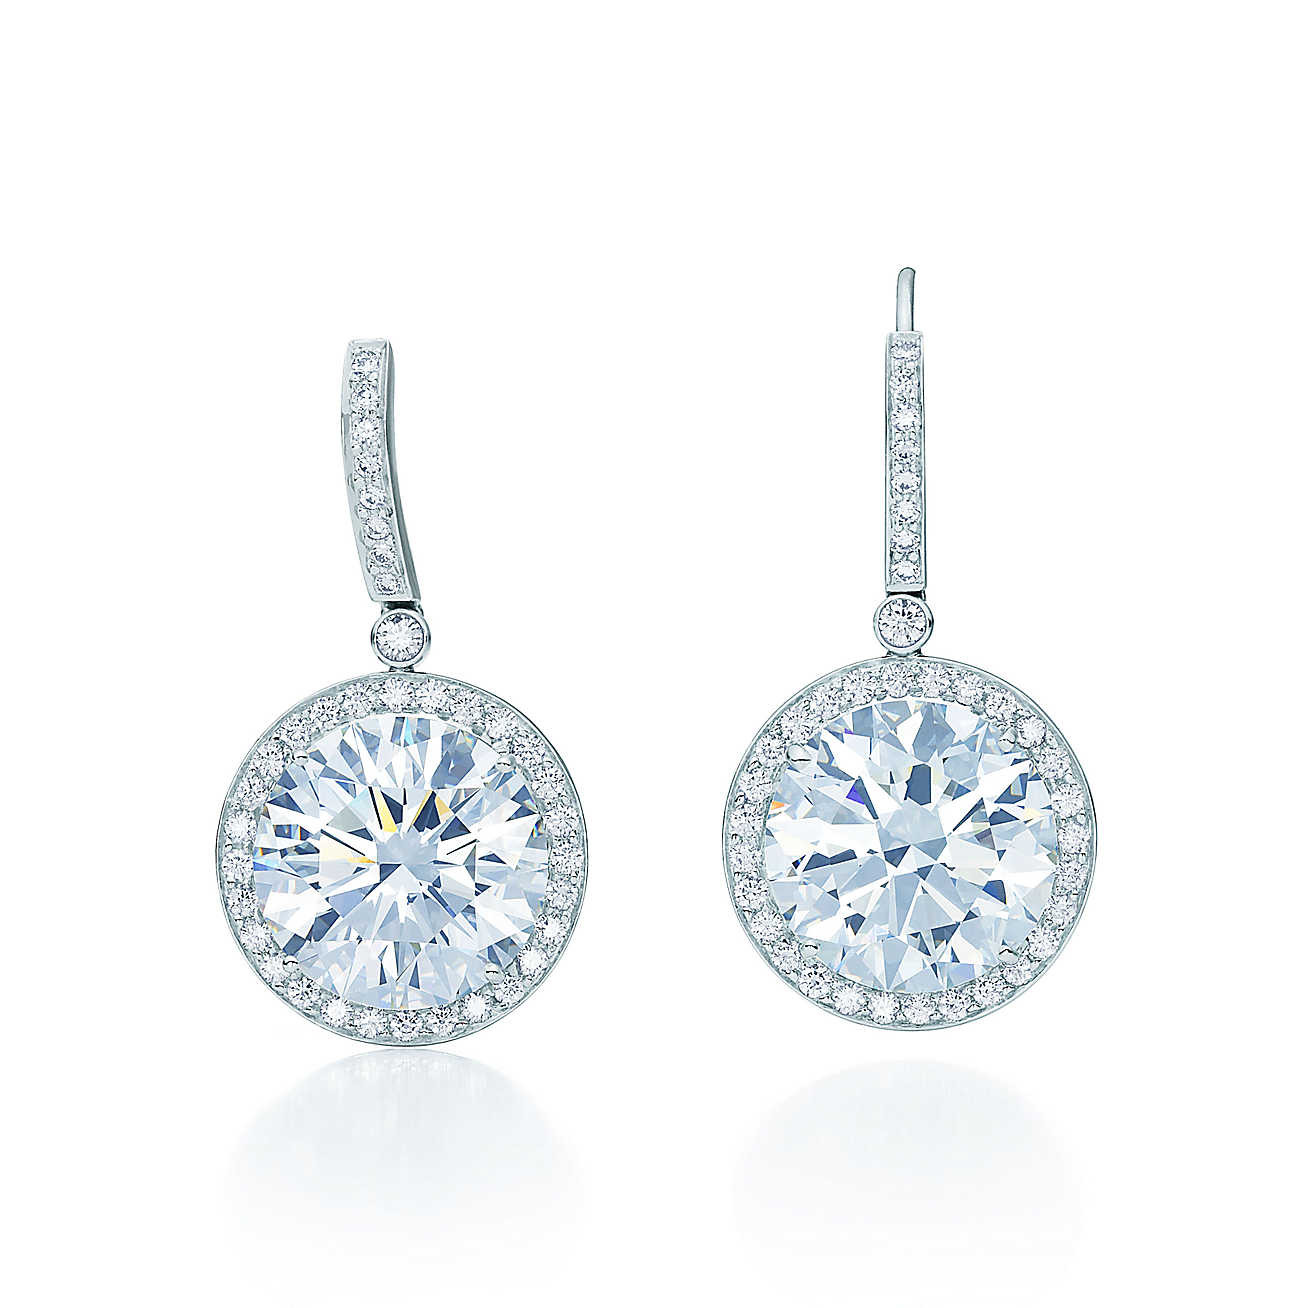 Tiffany Diamond Earrings
 Earrings of round brilliant diamonds in platinum